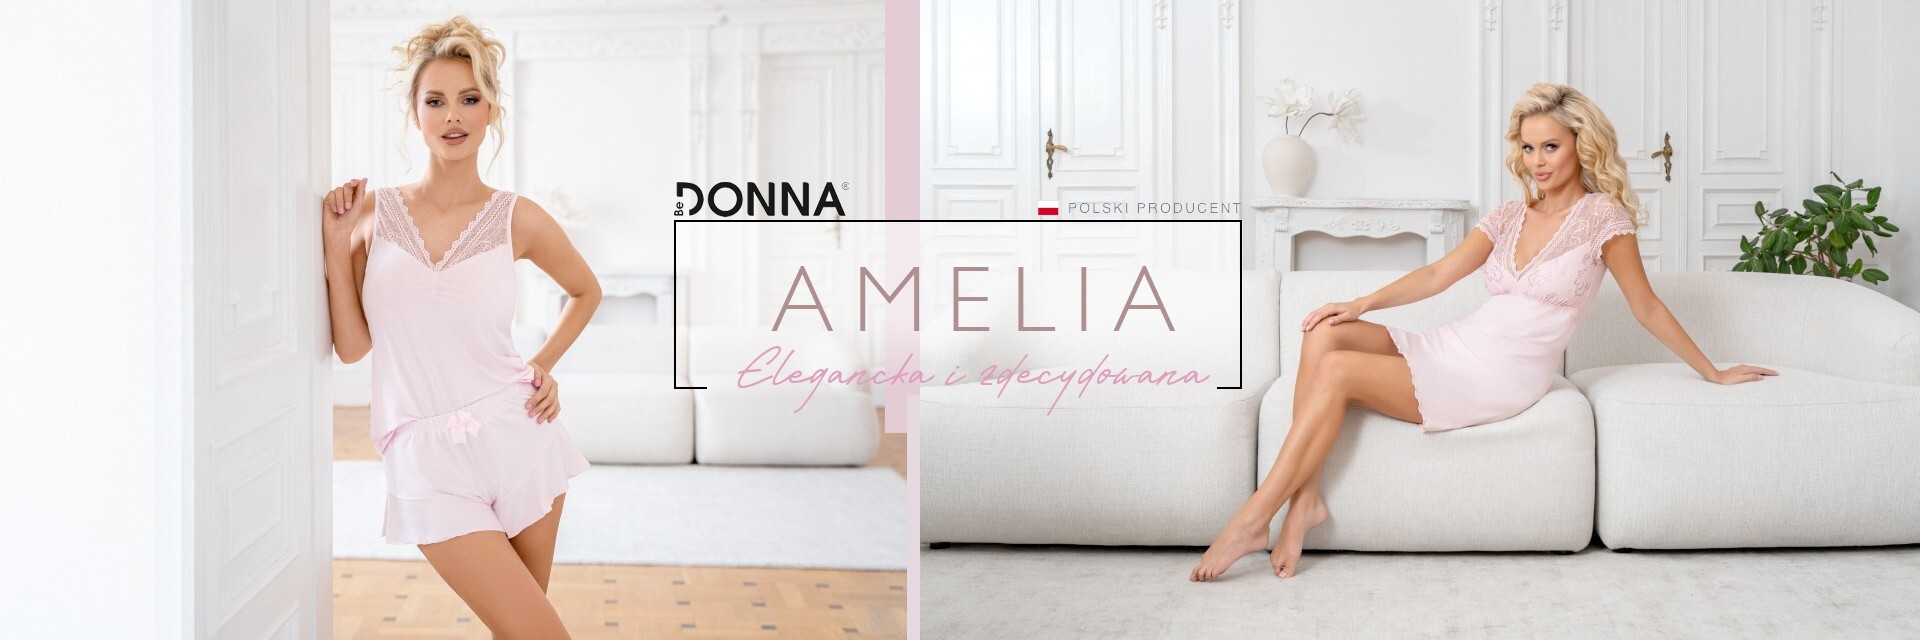 amelia-donna